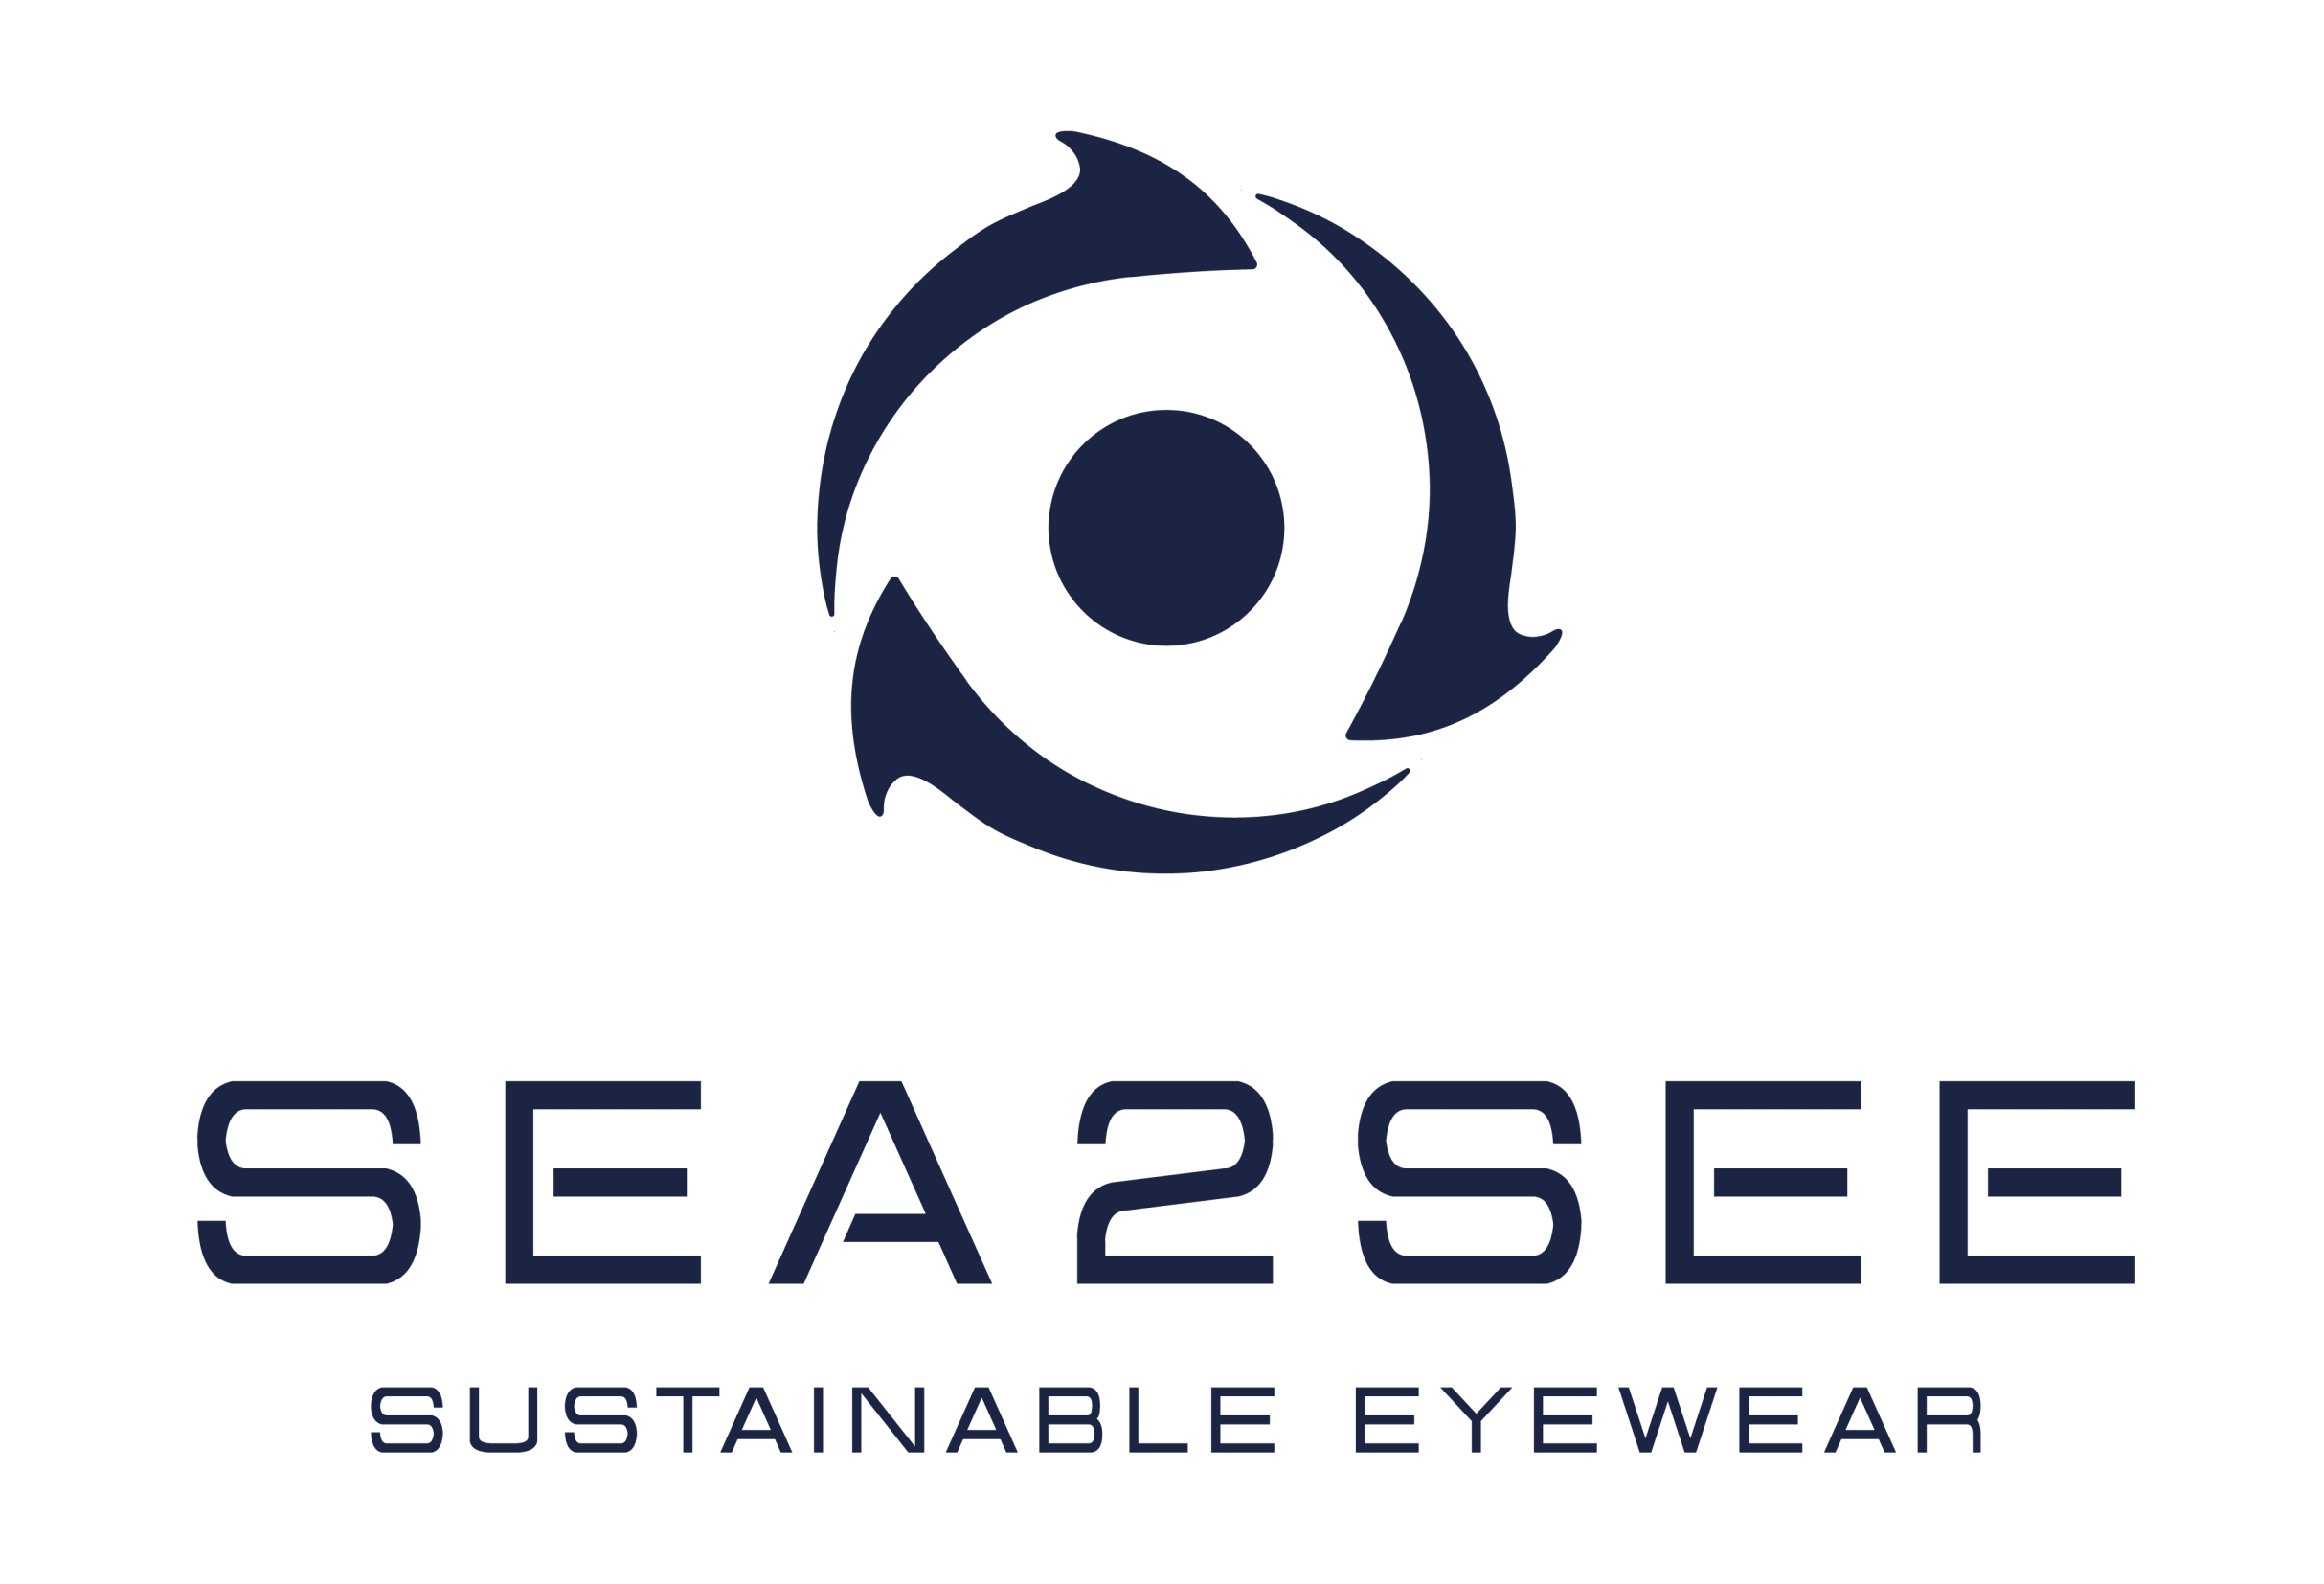 Sea2see Eyewear